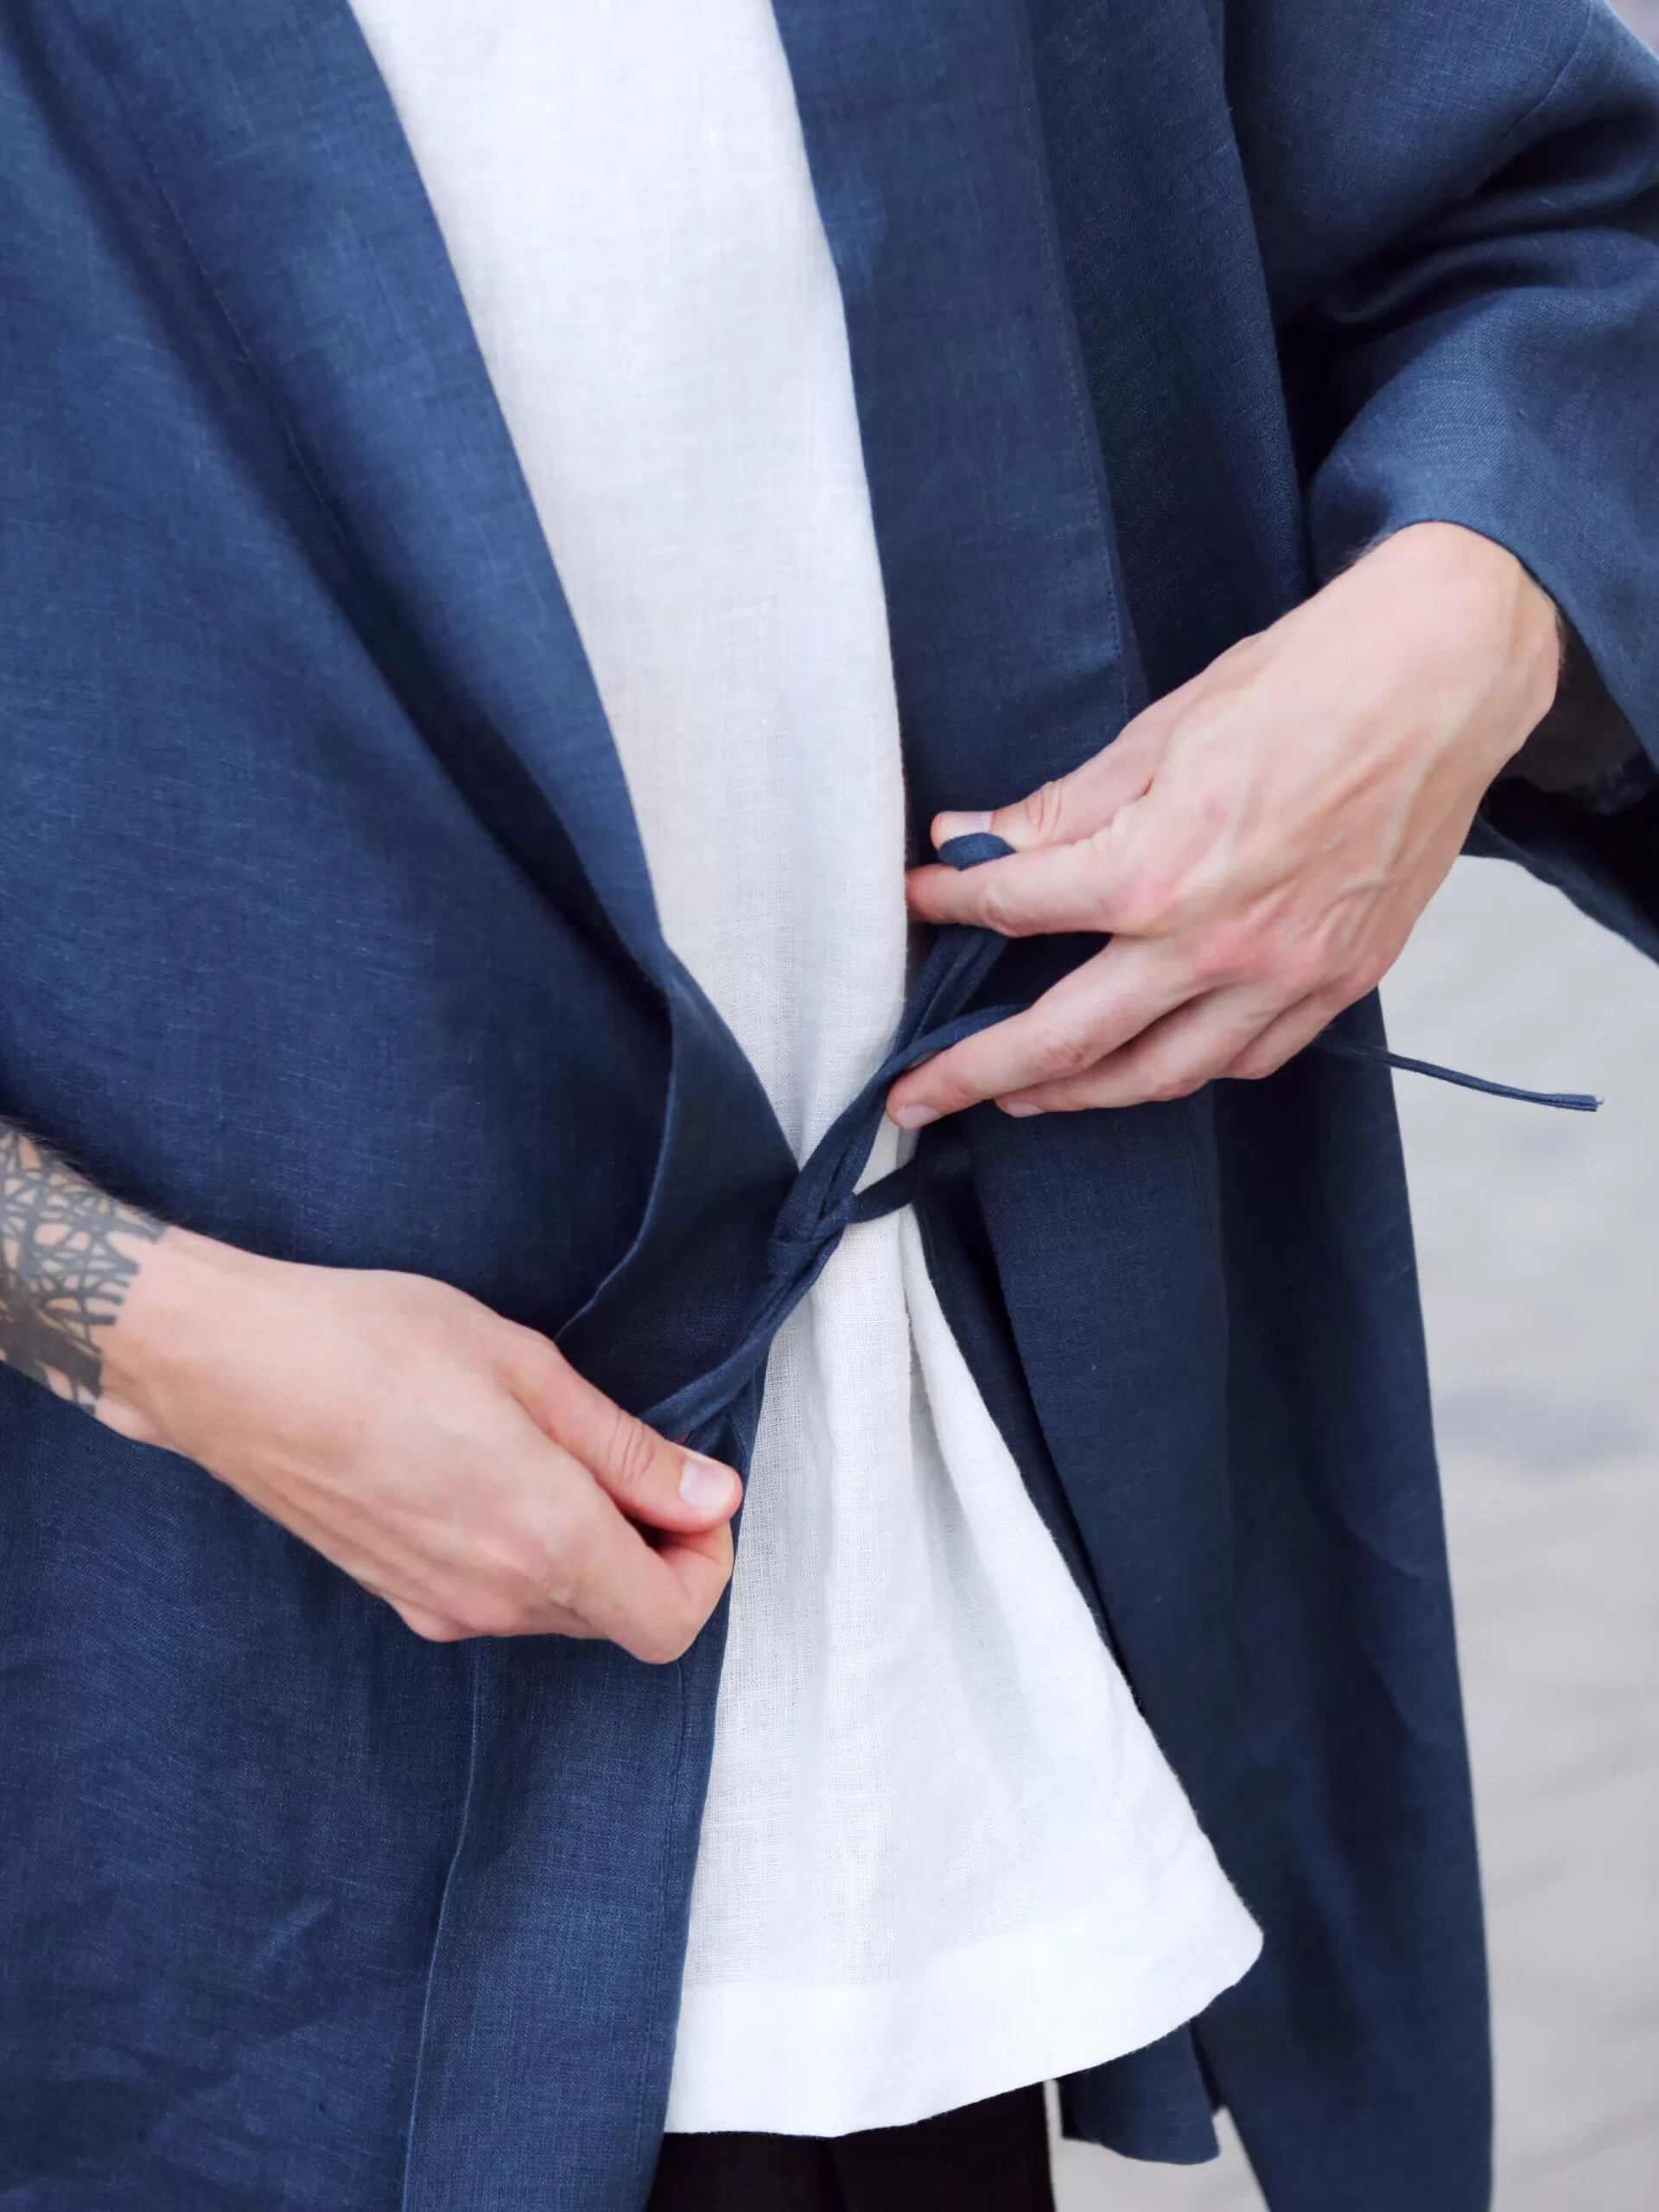 Mens Linen Kimono Jacket - Black Ficus Linen Clothing